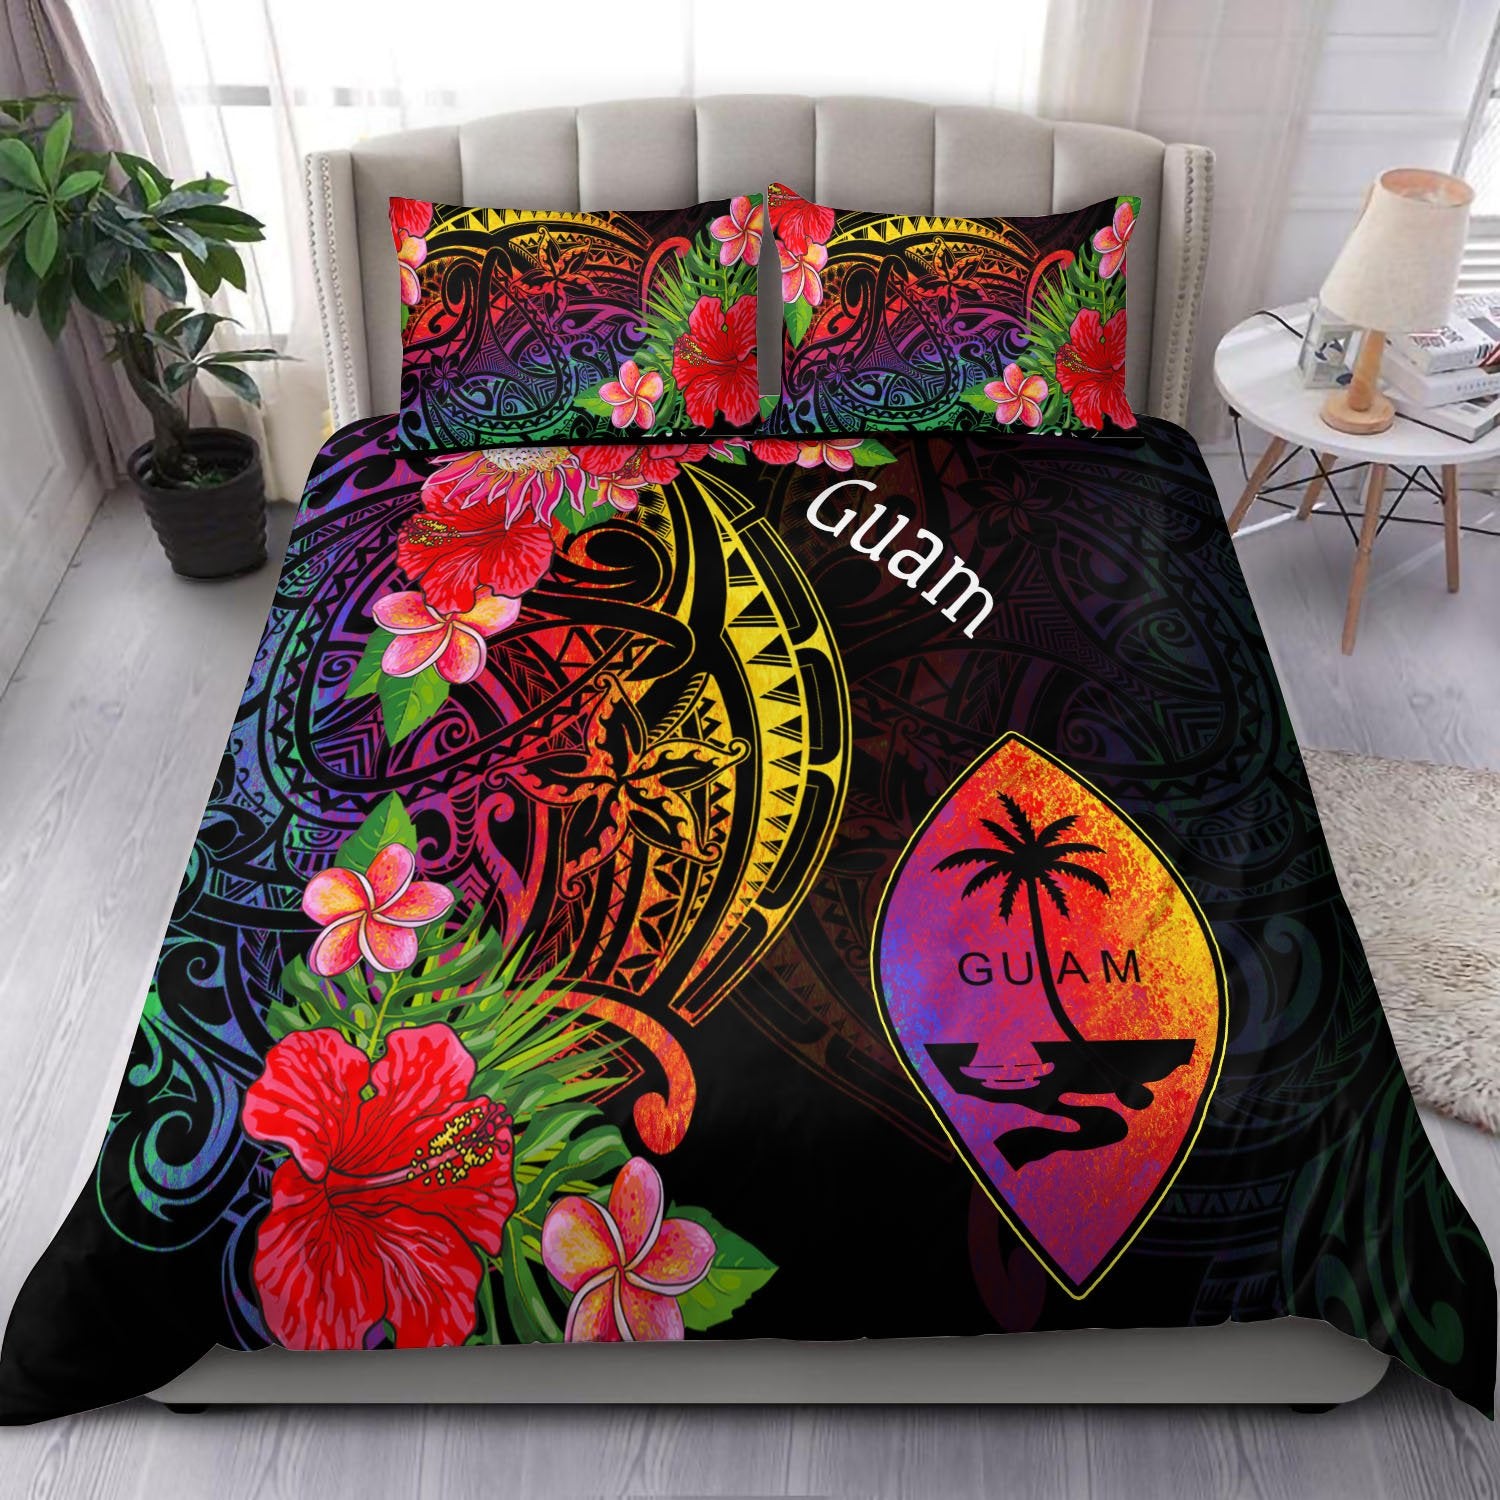 Guam Bedding Set - Tropical Hippie Style Black - Polynesian Pride